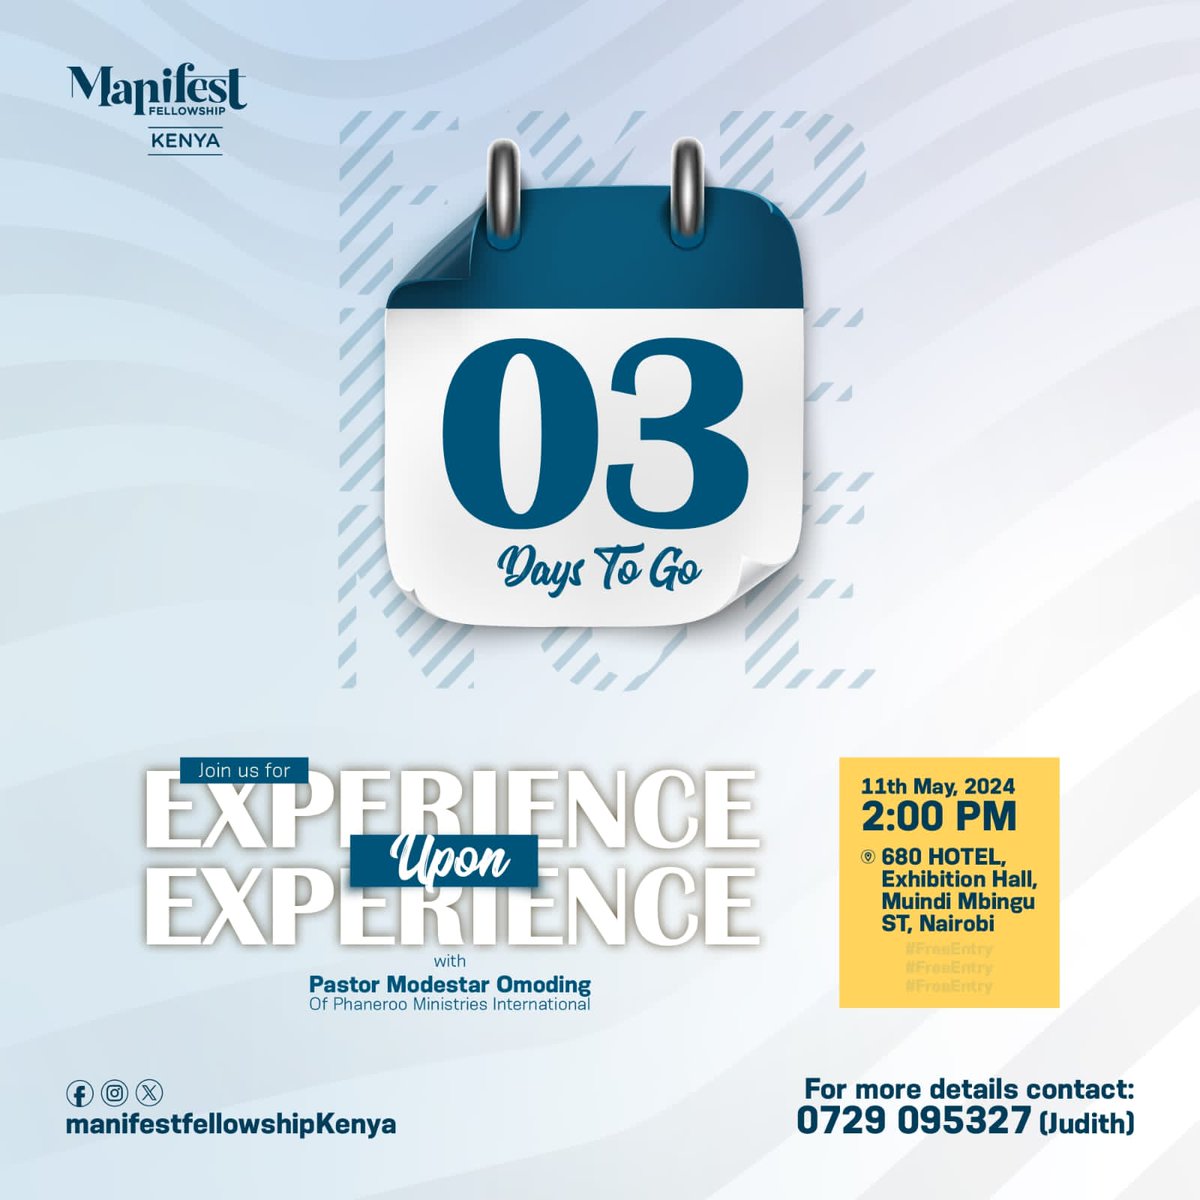 #ExperienceUponExperience
#BringAFriend